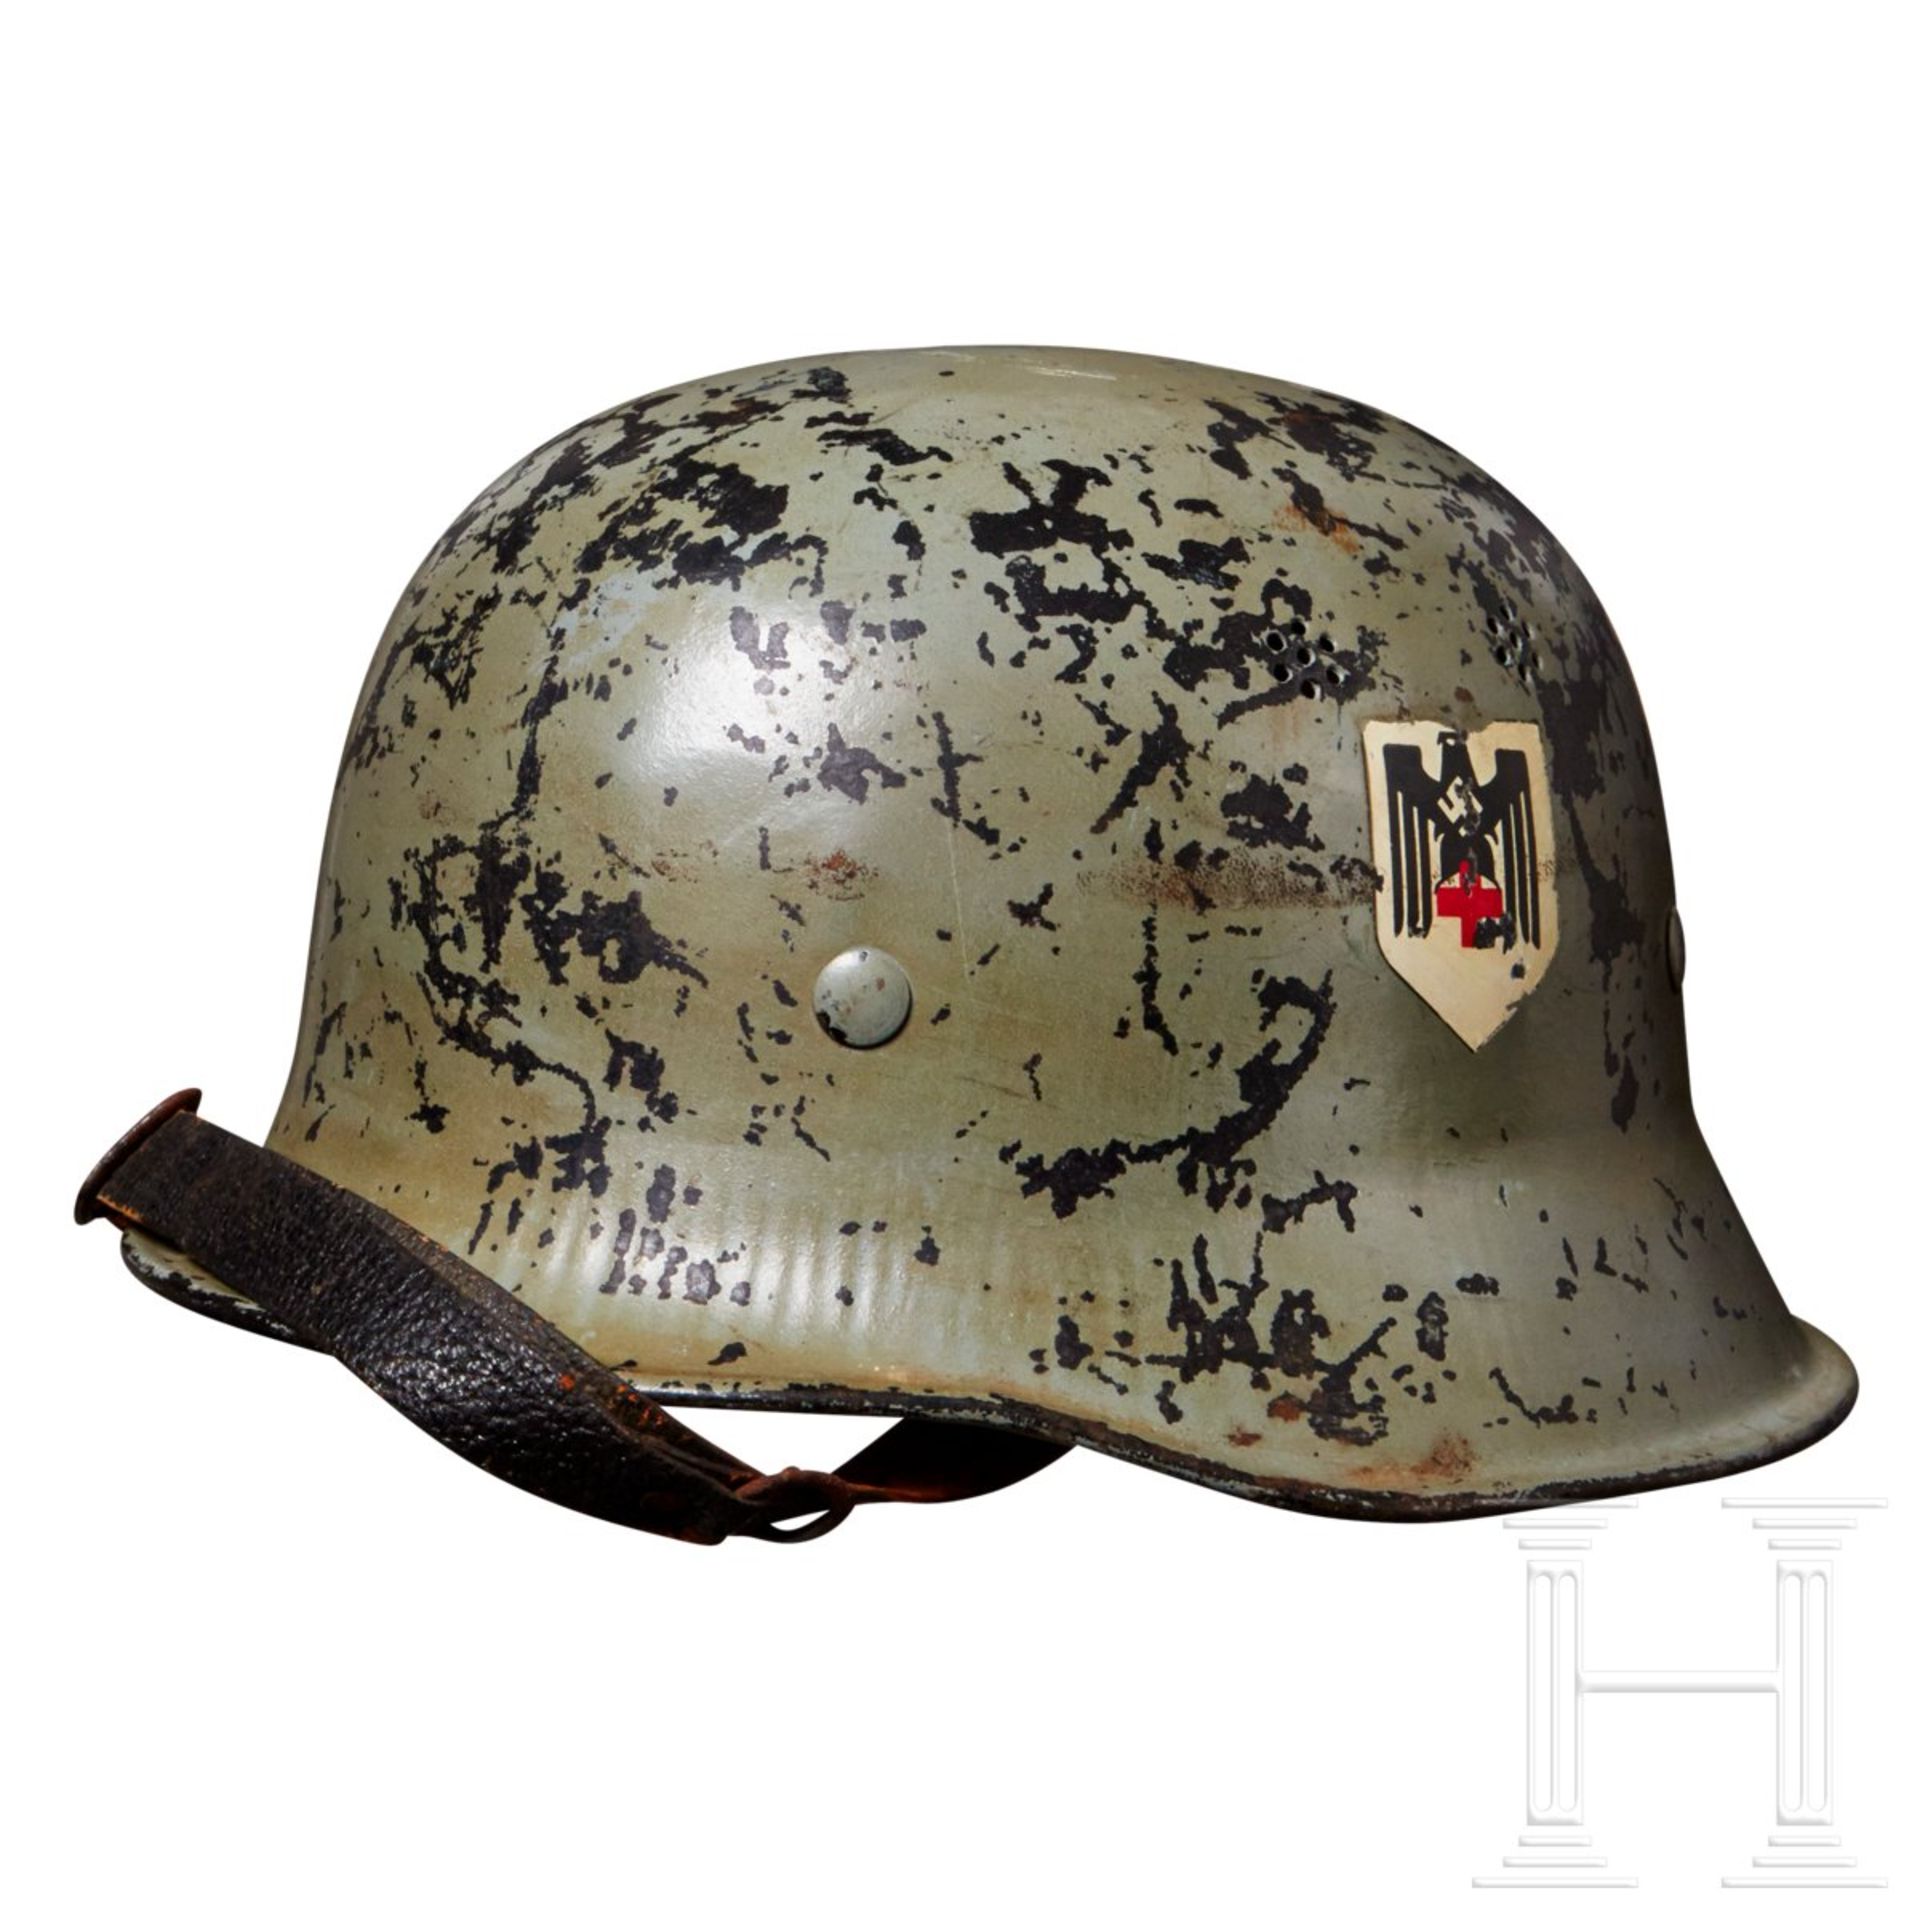 A Steel Helmet M 34 Red Cross Single Decal